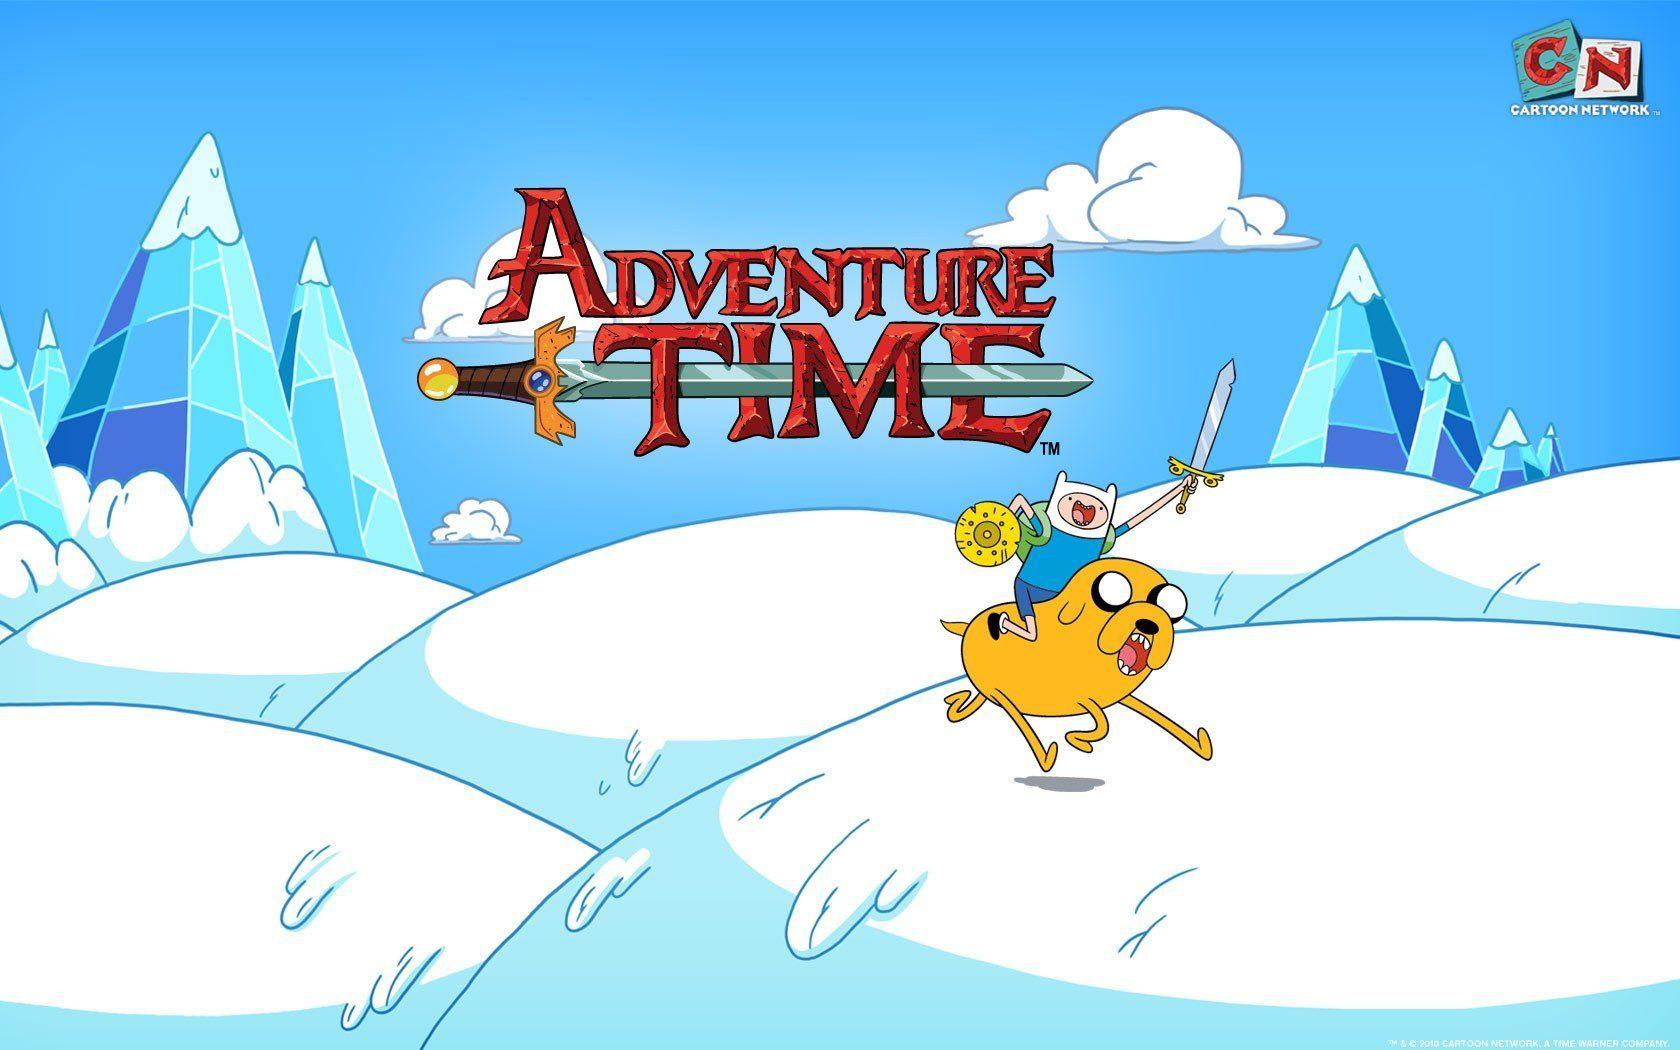 Adventure Time Cartoon Network Cartoons Jake The Dog Finn Human